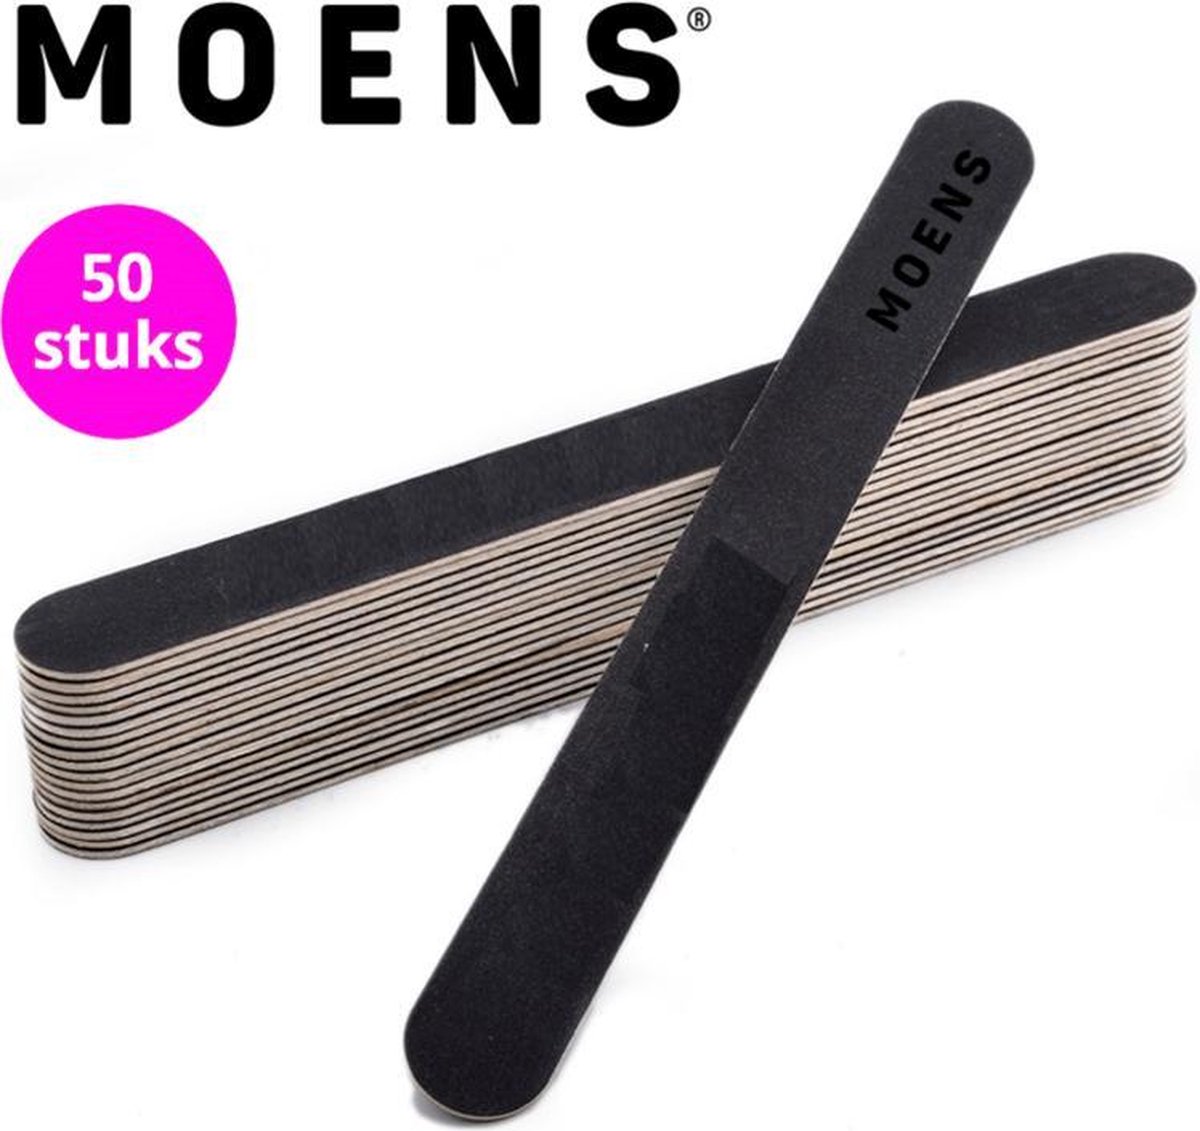 MOENS® Rechte nagel vijlen - 100/180 grit – 50 stuks – zwart